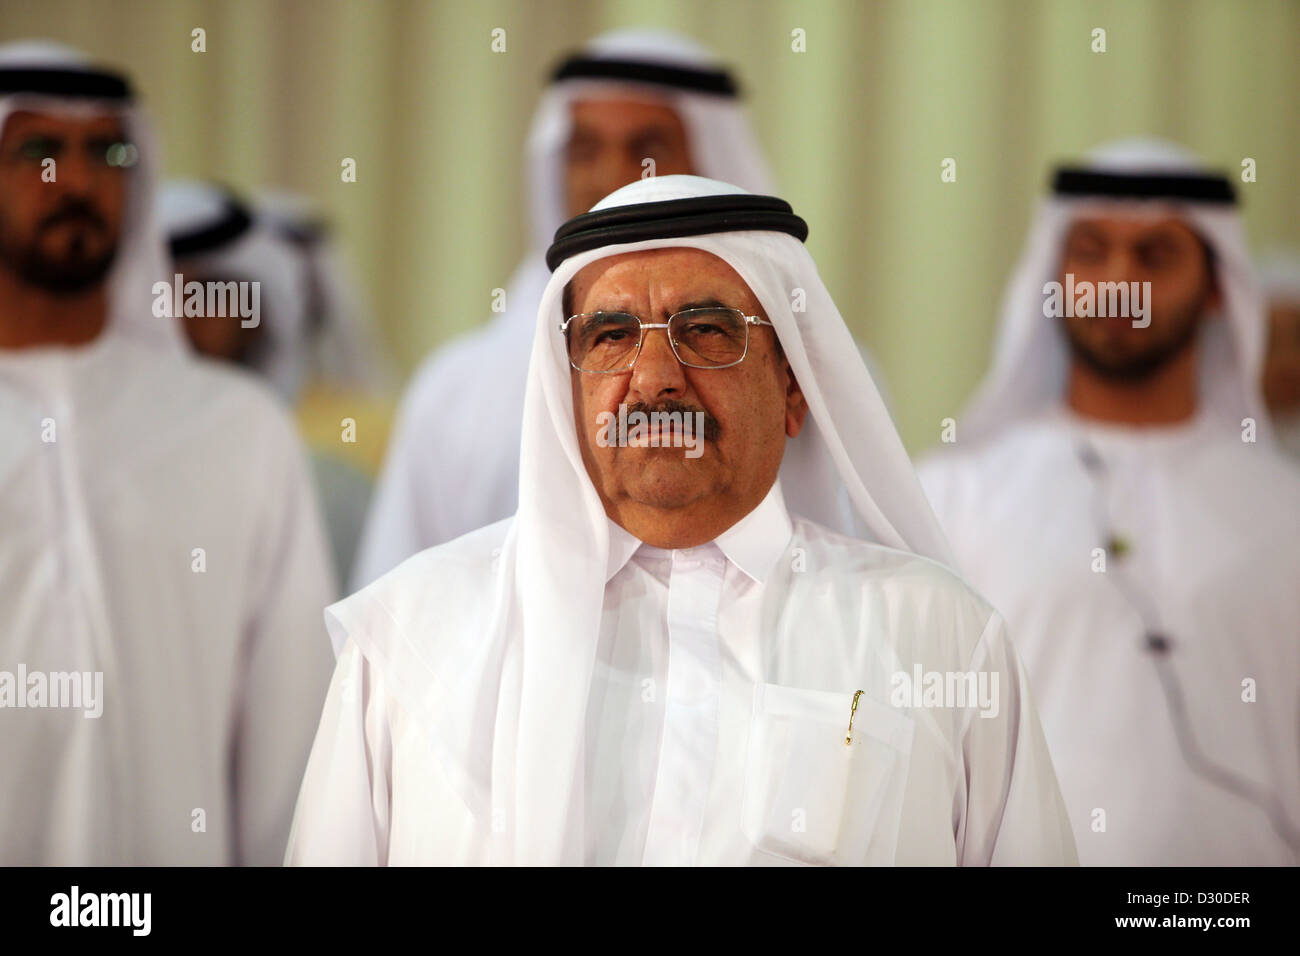 Hamdan bin rashid al maktoum hi-res stock photography and images - Alamy